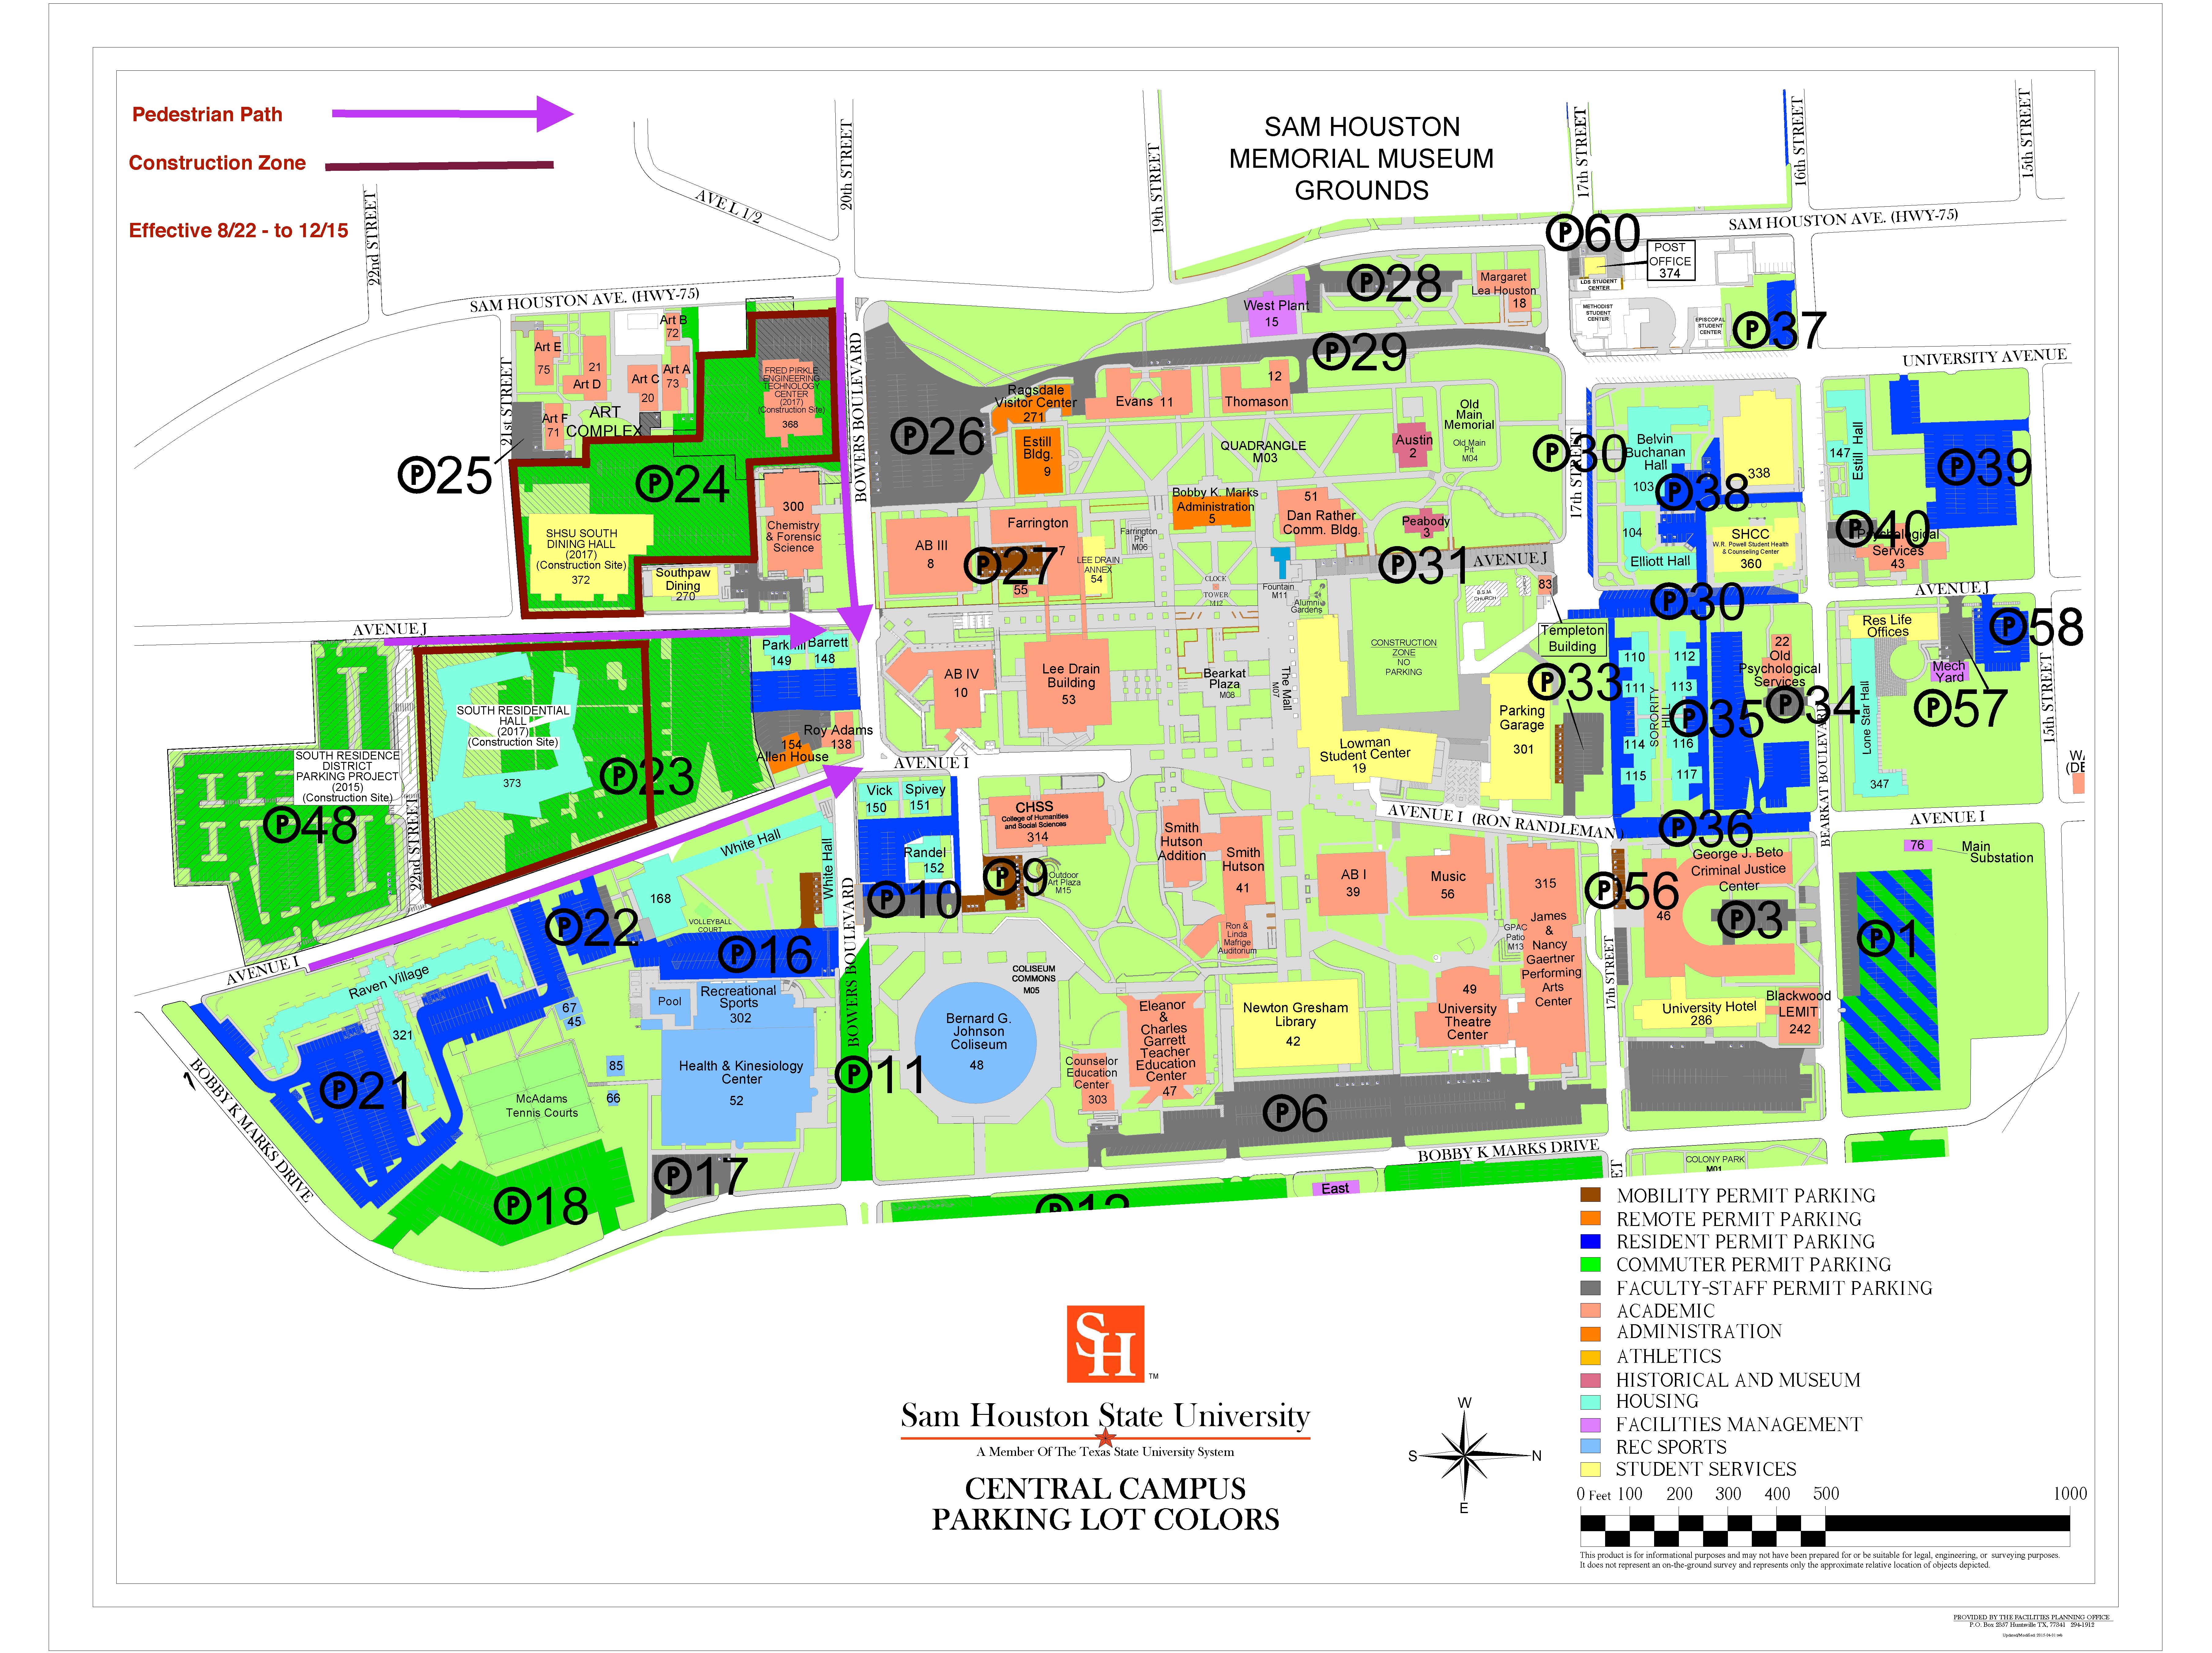 Facilities Management - Sam Houston State University